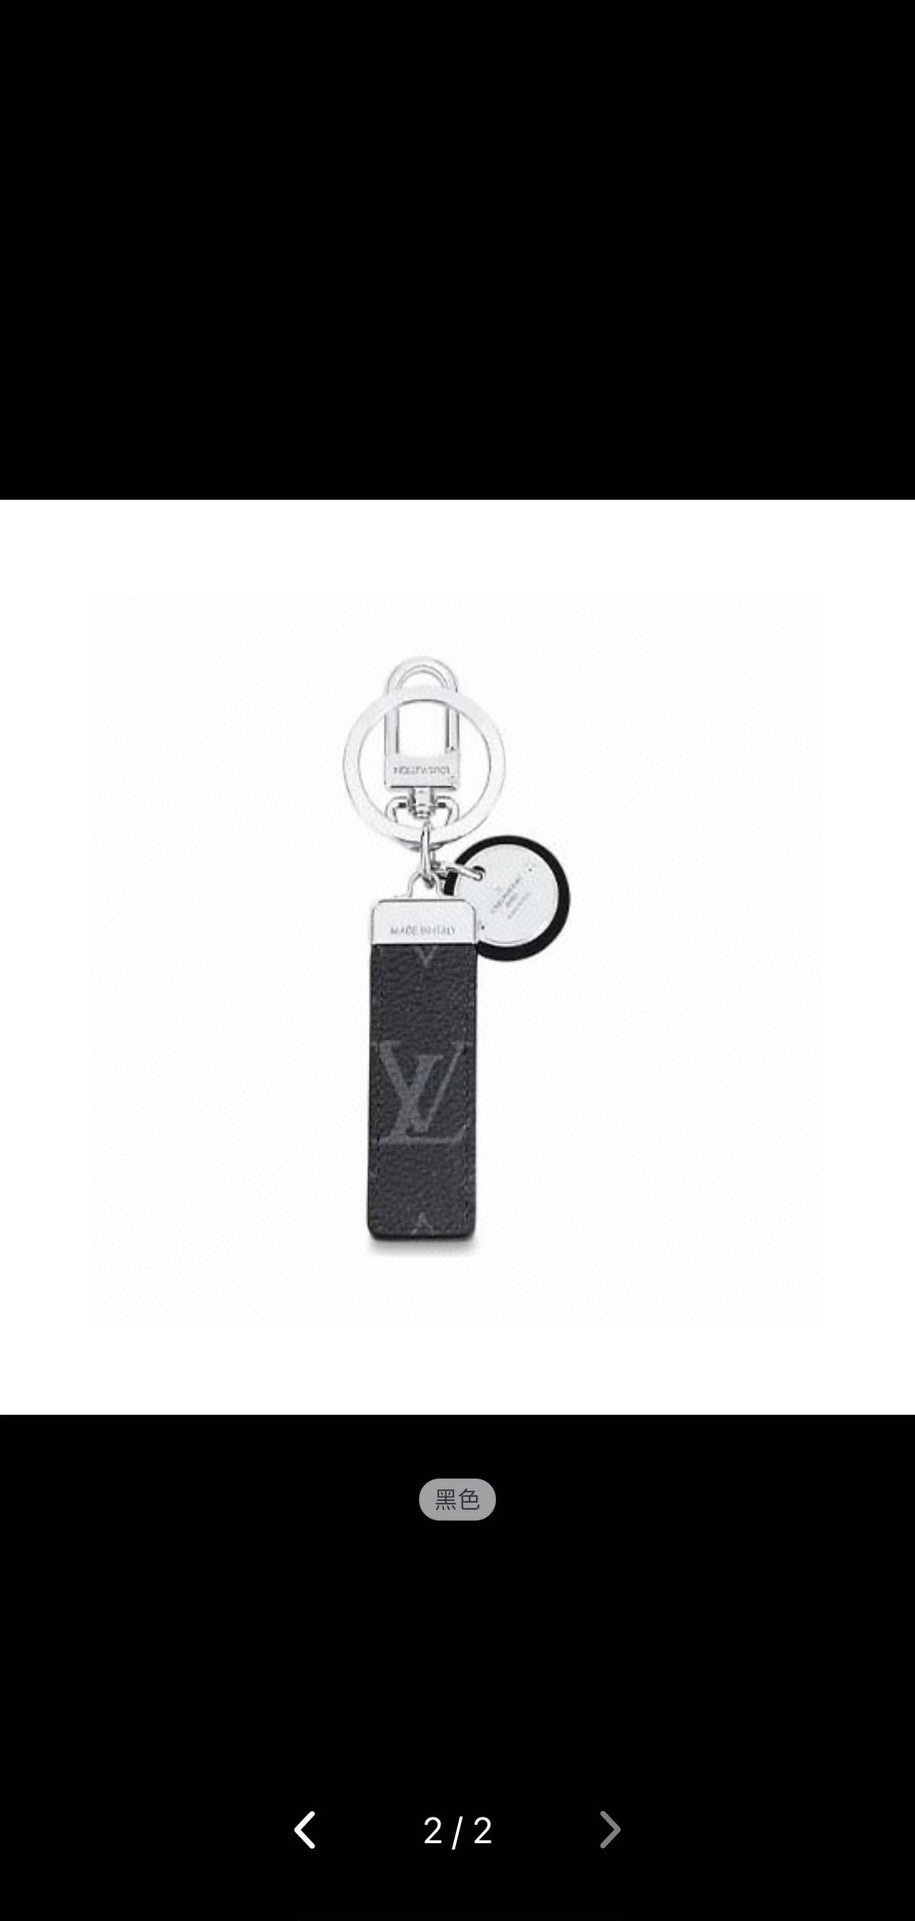 ️Lv钥匙扣借鉴旅行袋中的钥匙扣设计可满足各种时尚品味的实用配饰新版MonogramEcliPse搭配银